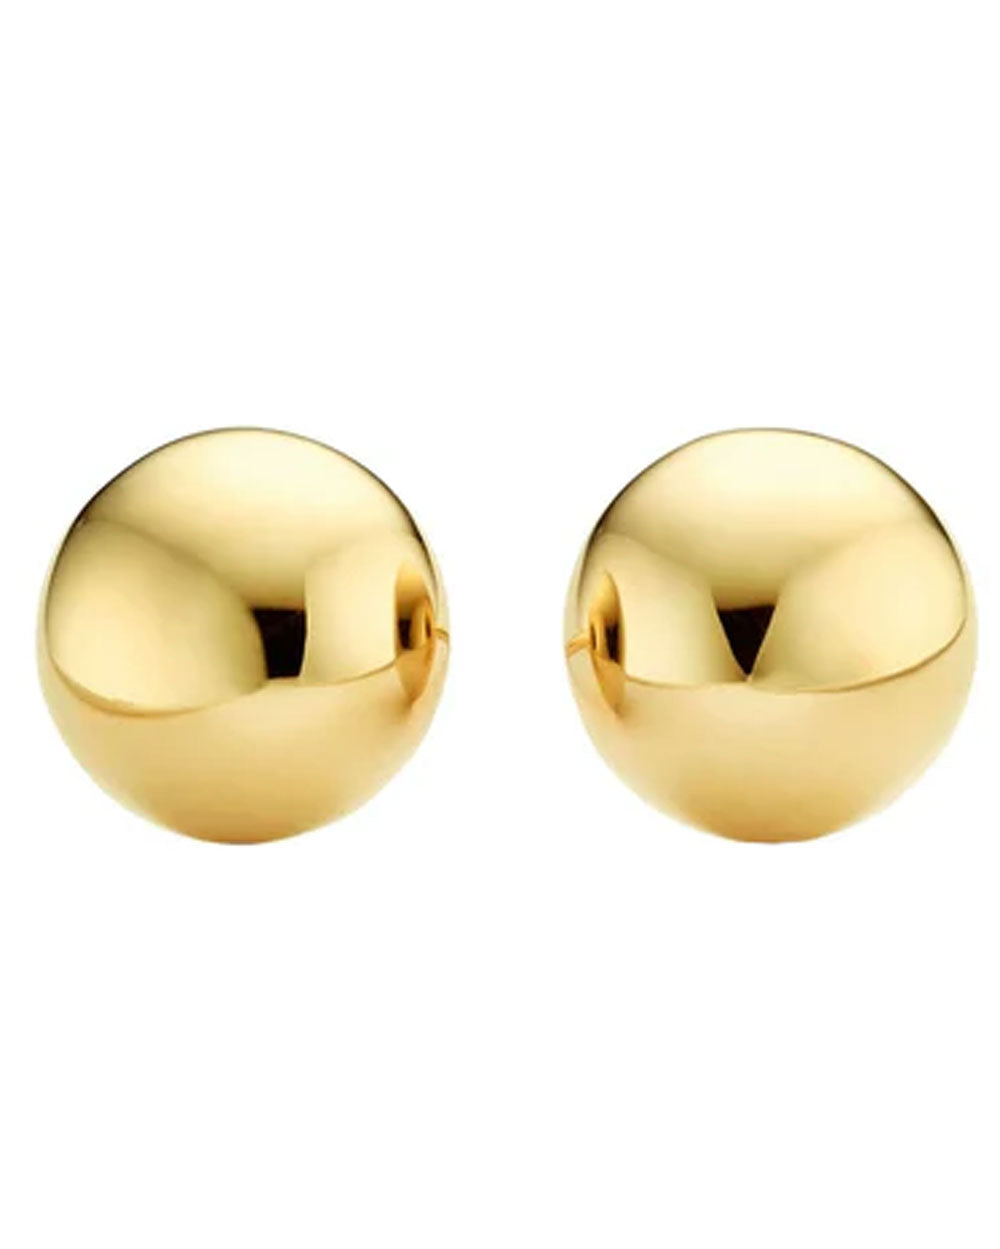 Medium Gold Stud Earrings #9